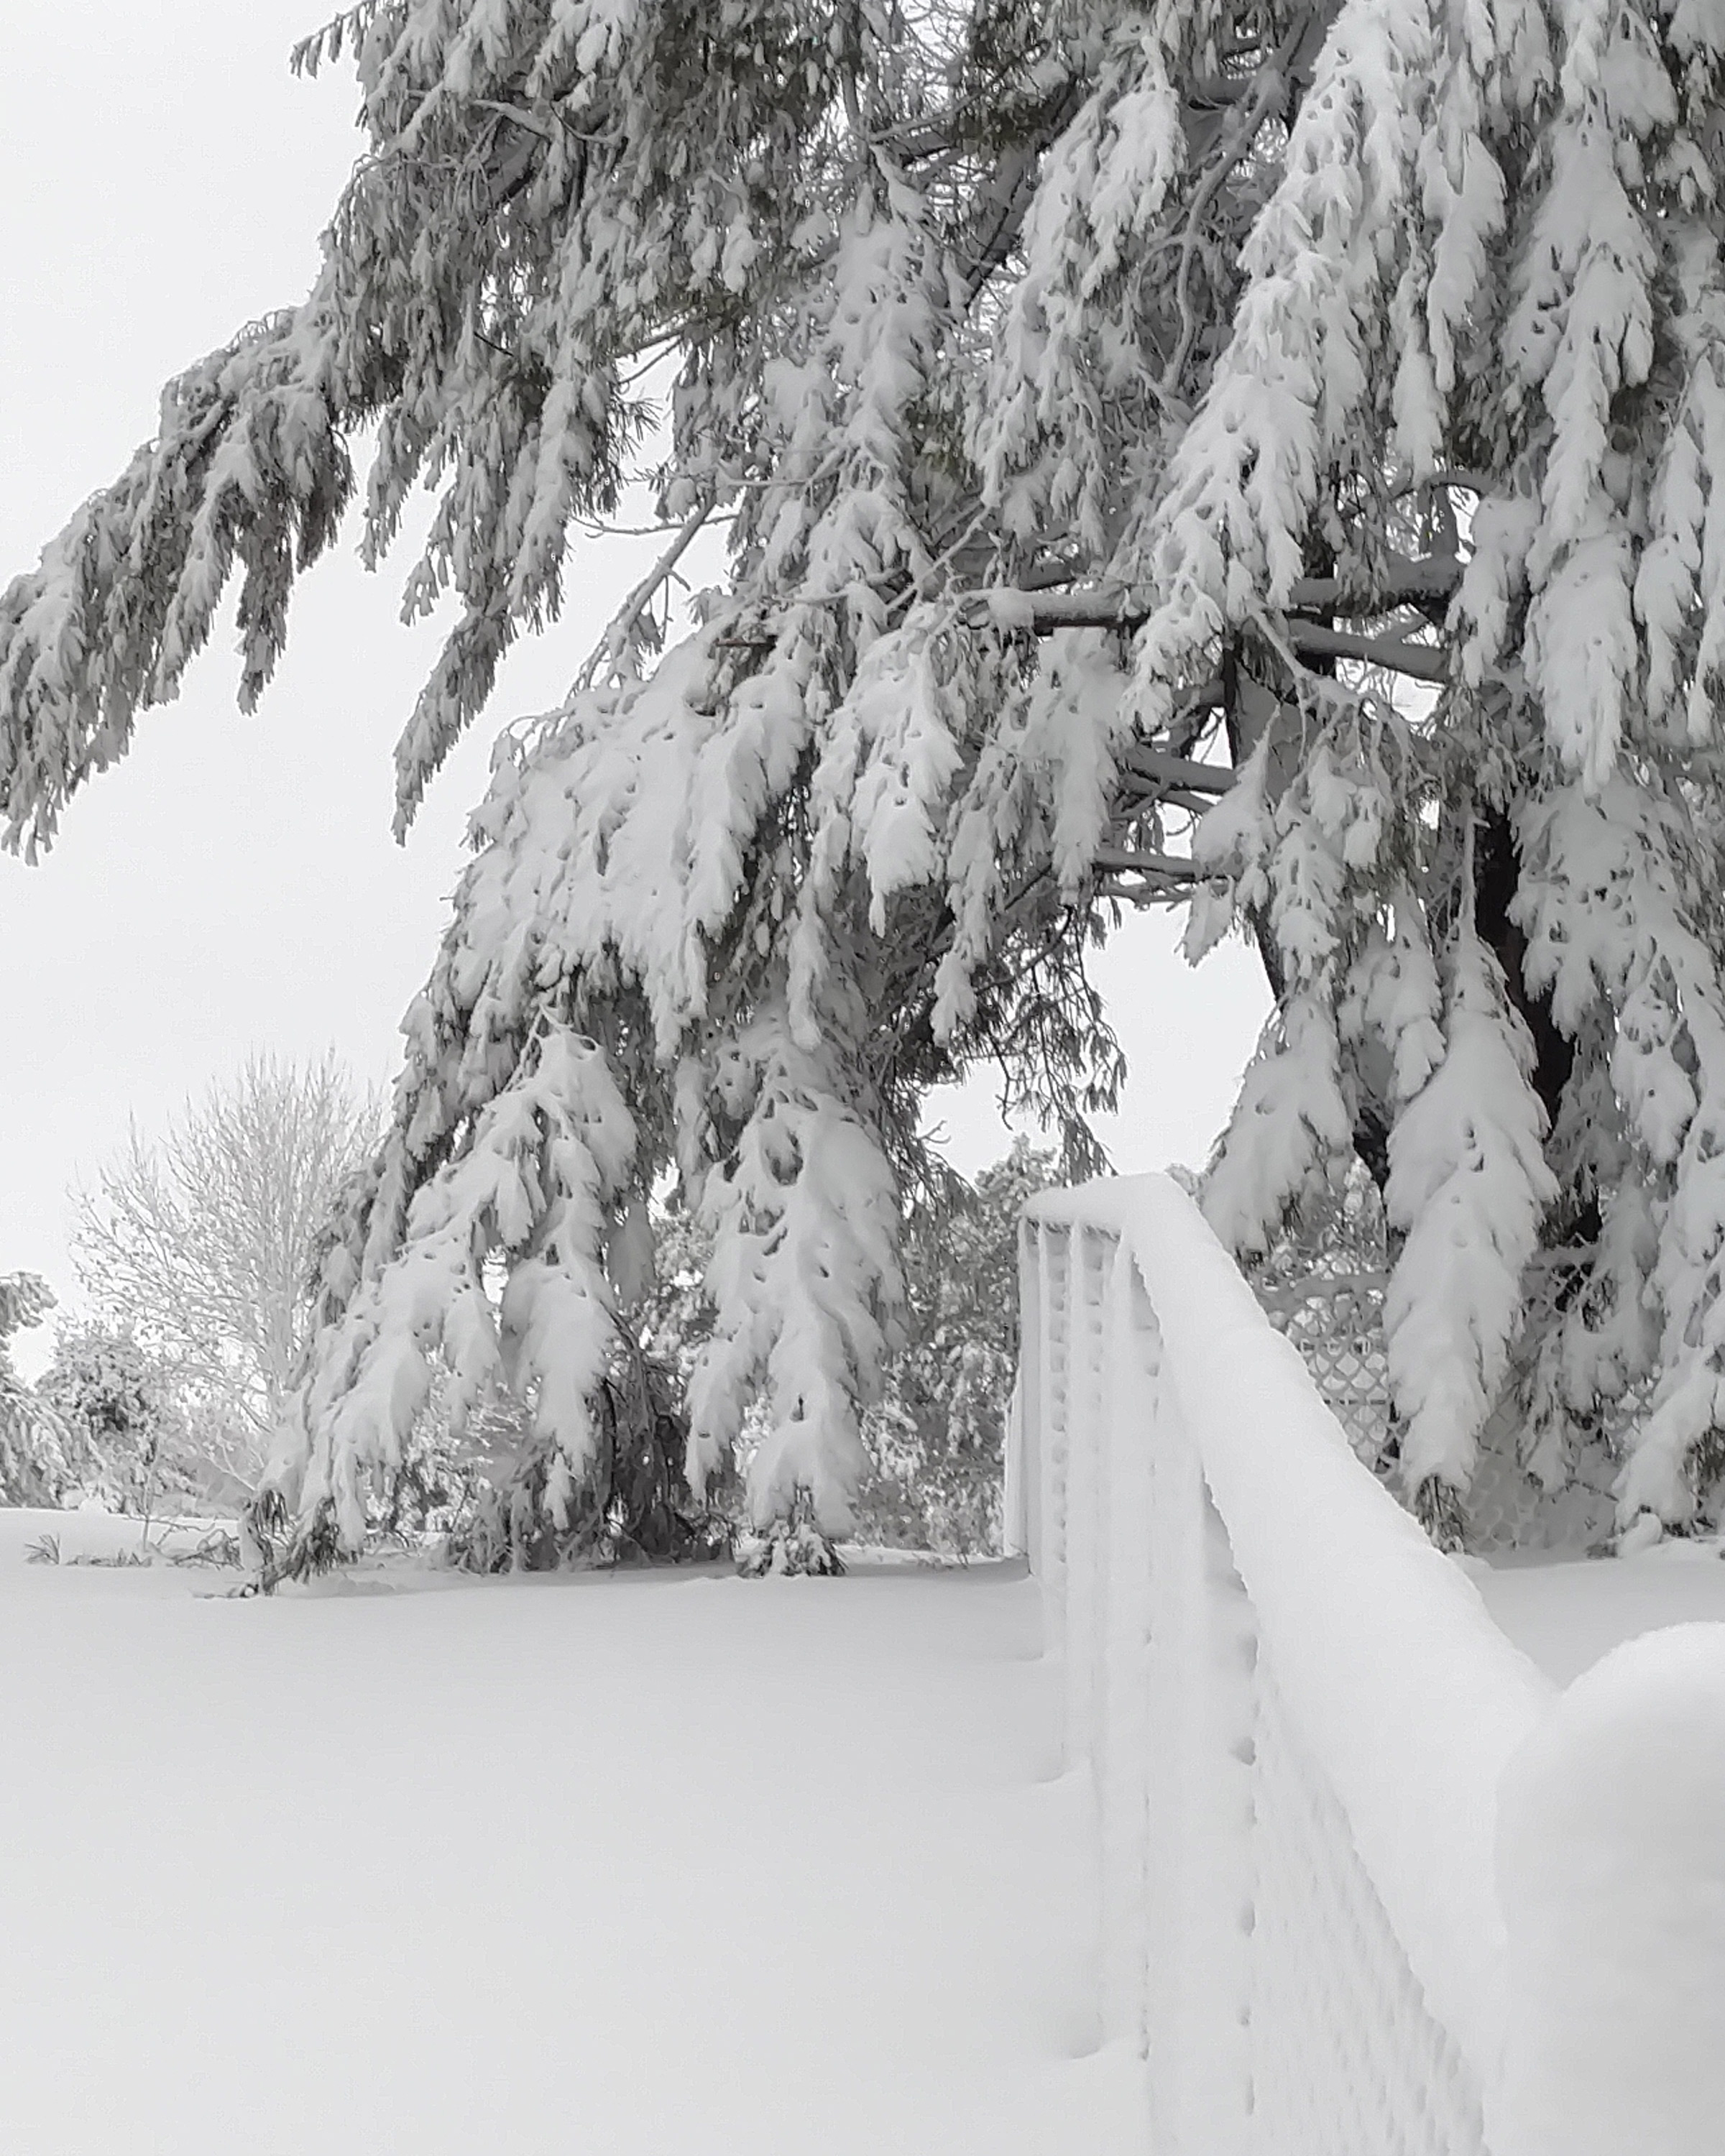 Snow loading on trees